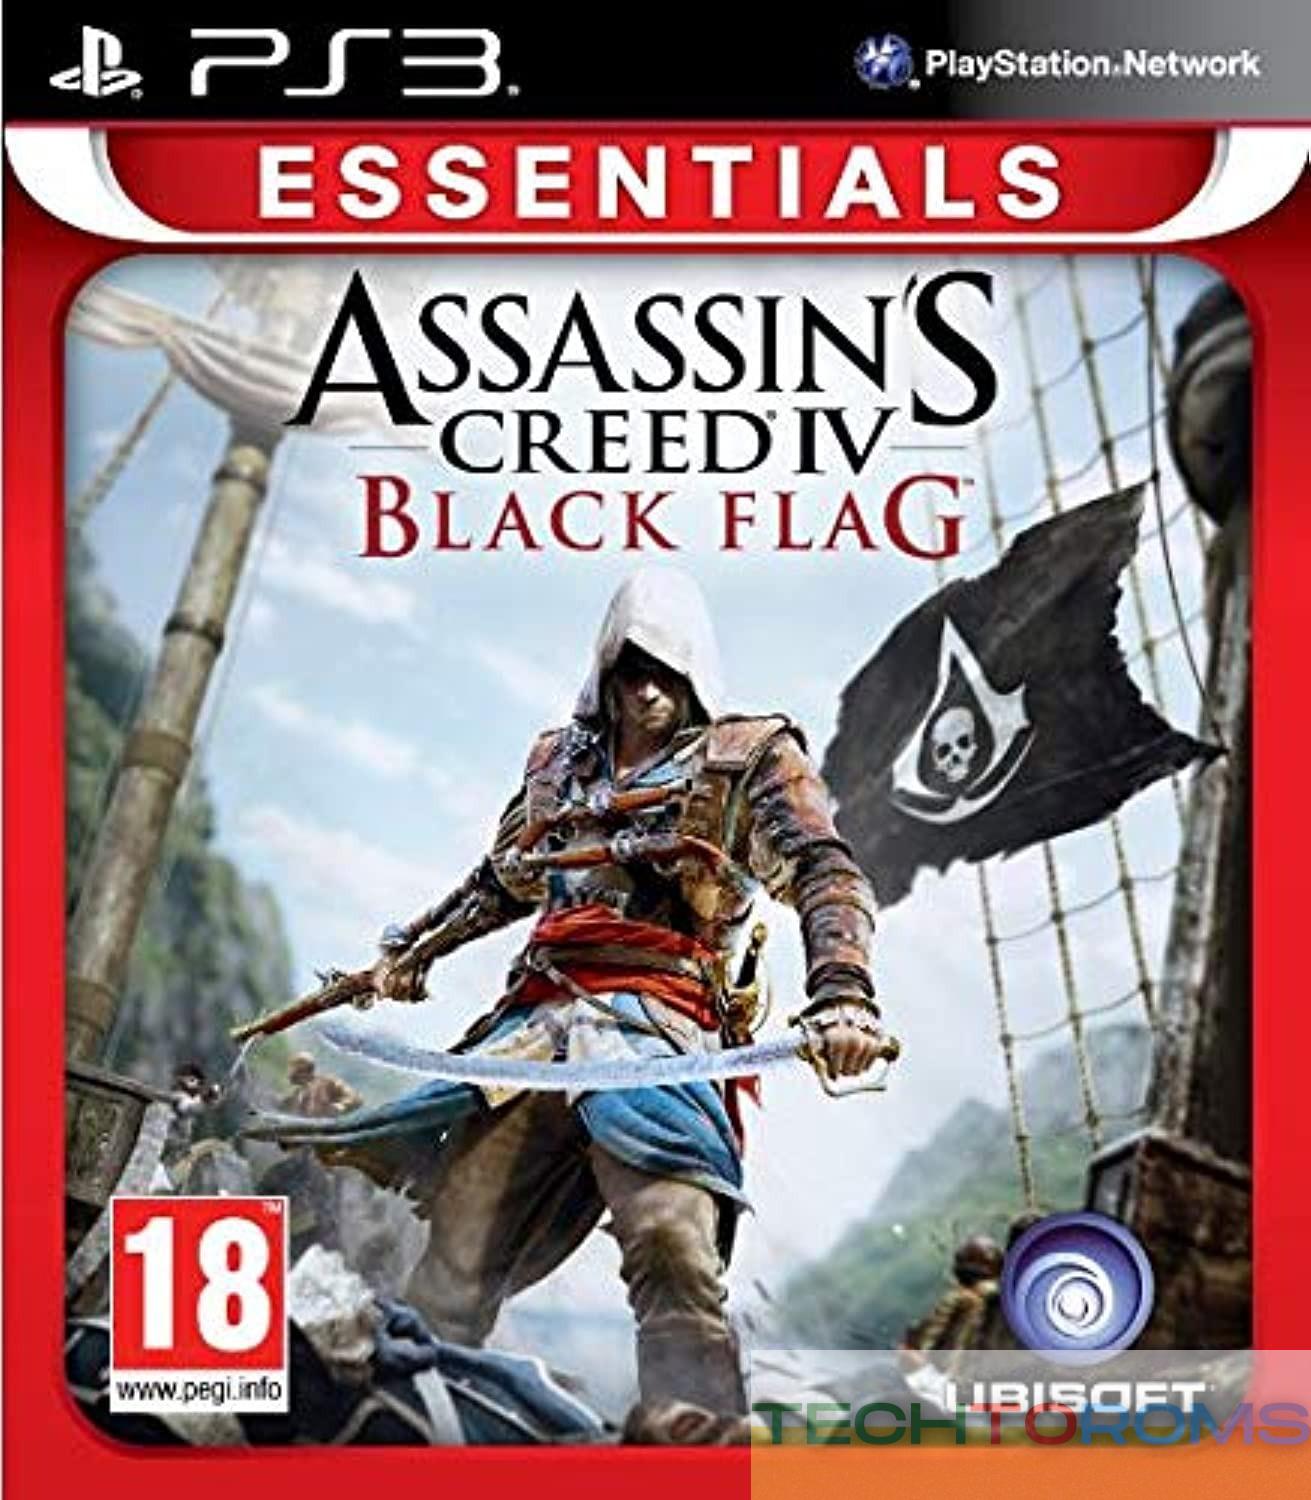 Assassin's Creed IV: Black Bandeira